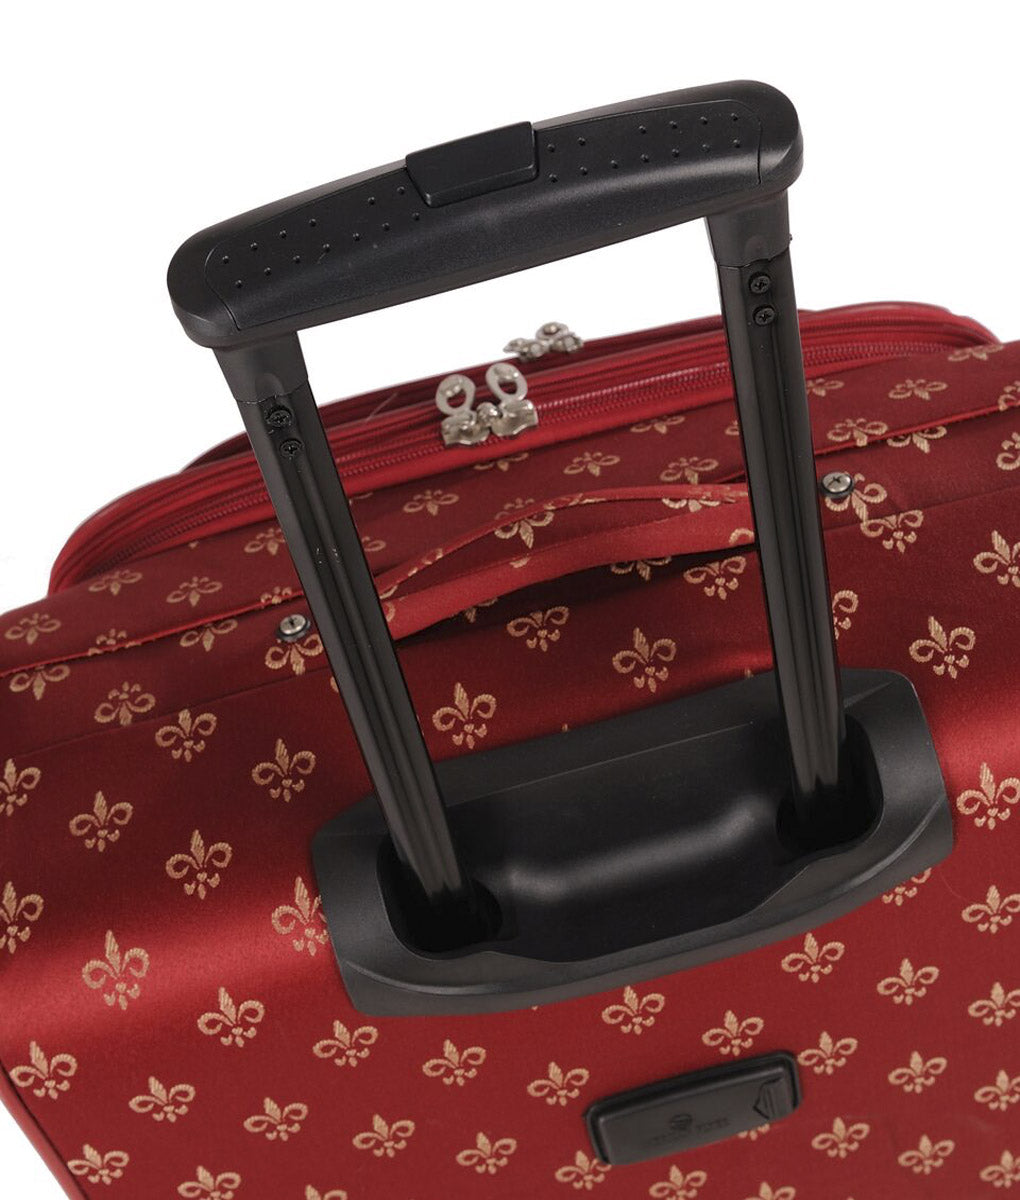  American Flyer Fleur De Lis 5-Piece Spinner Luggage Set, Black,  One Size,85700-5